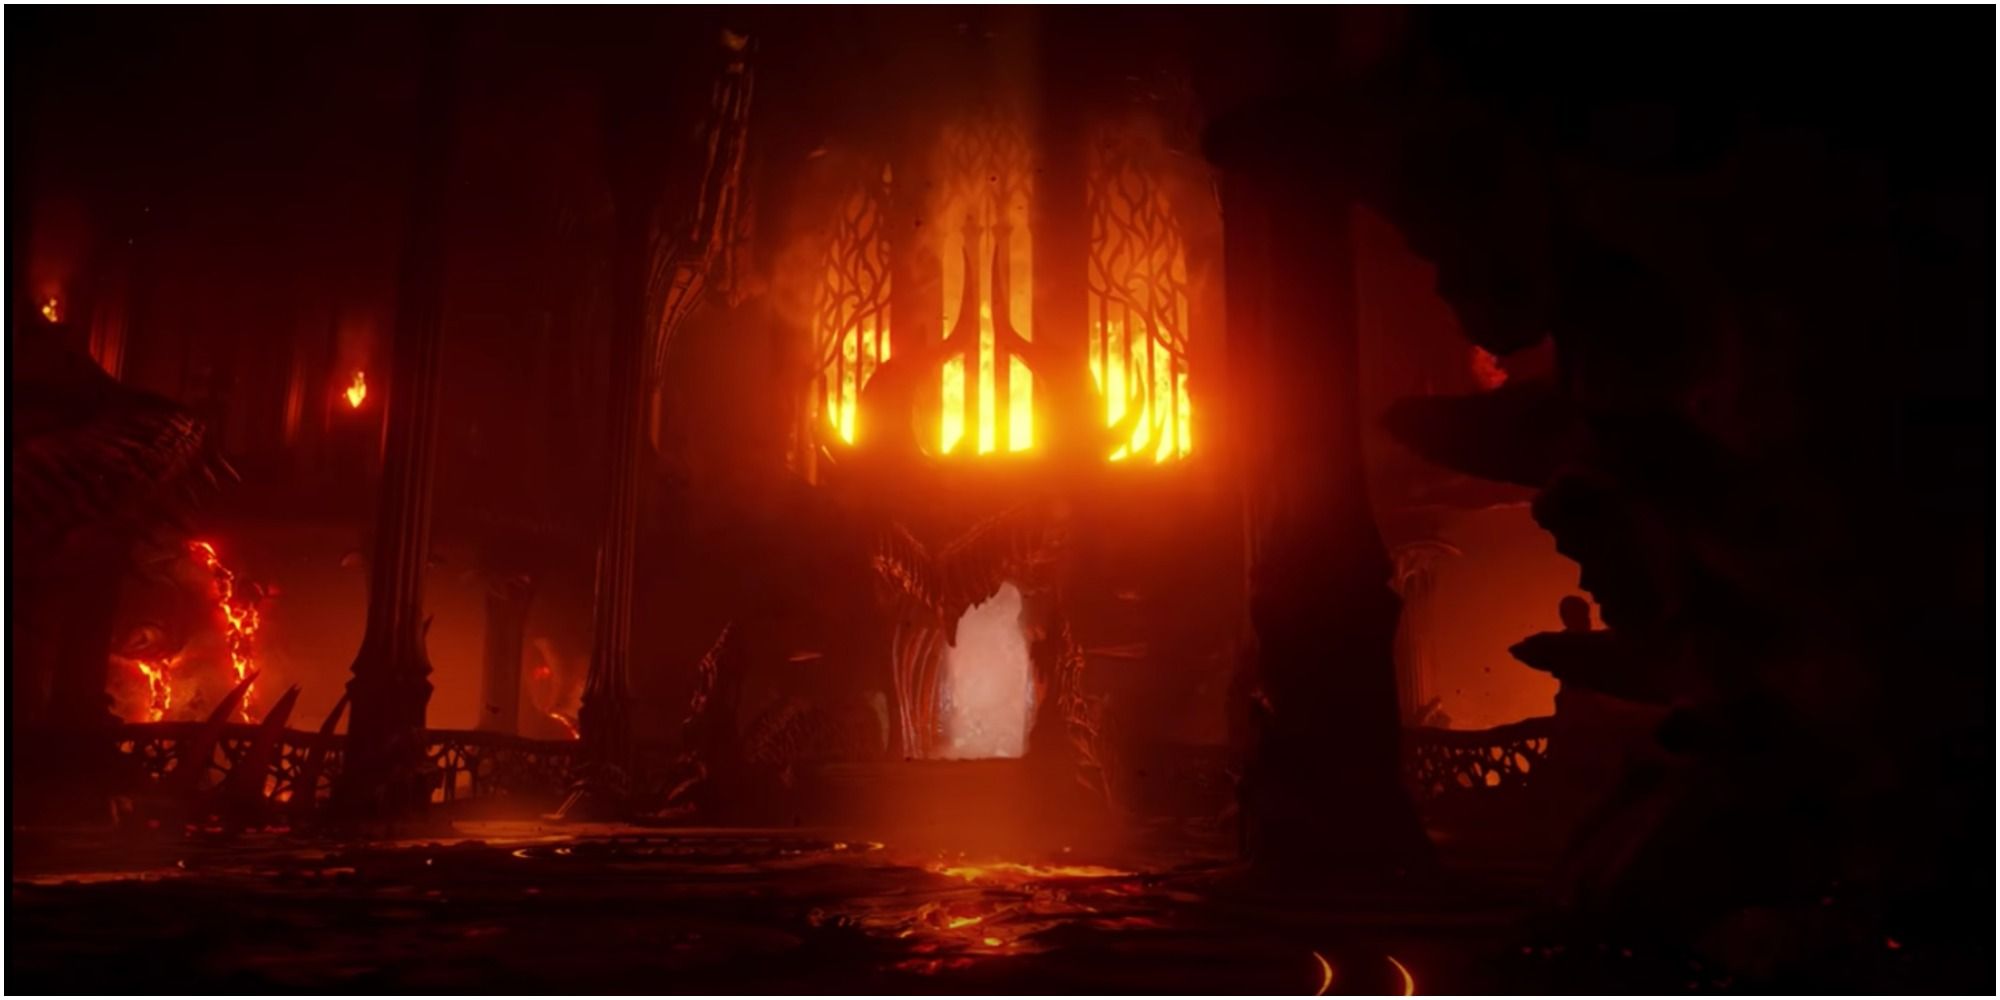 Demon's Souls Flamelurker's boss arena